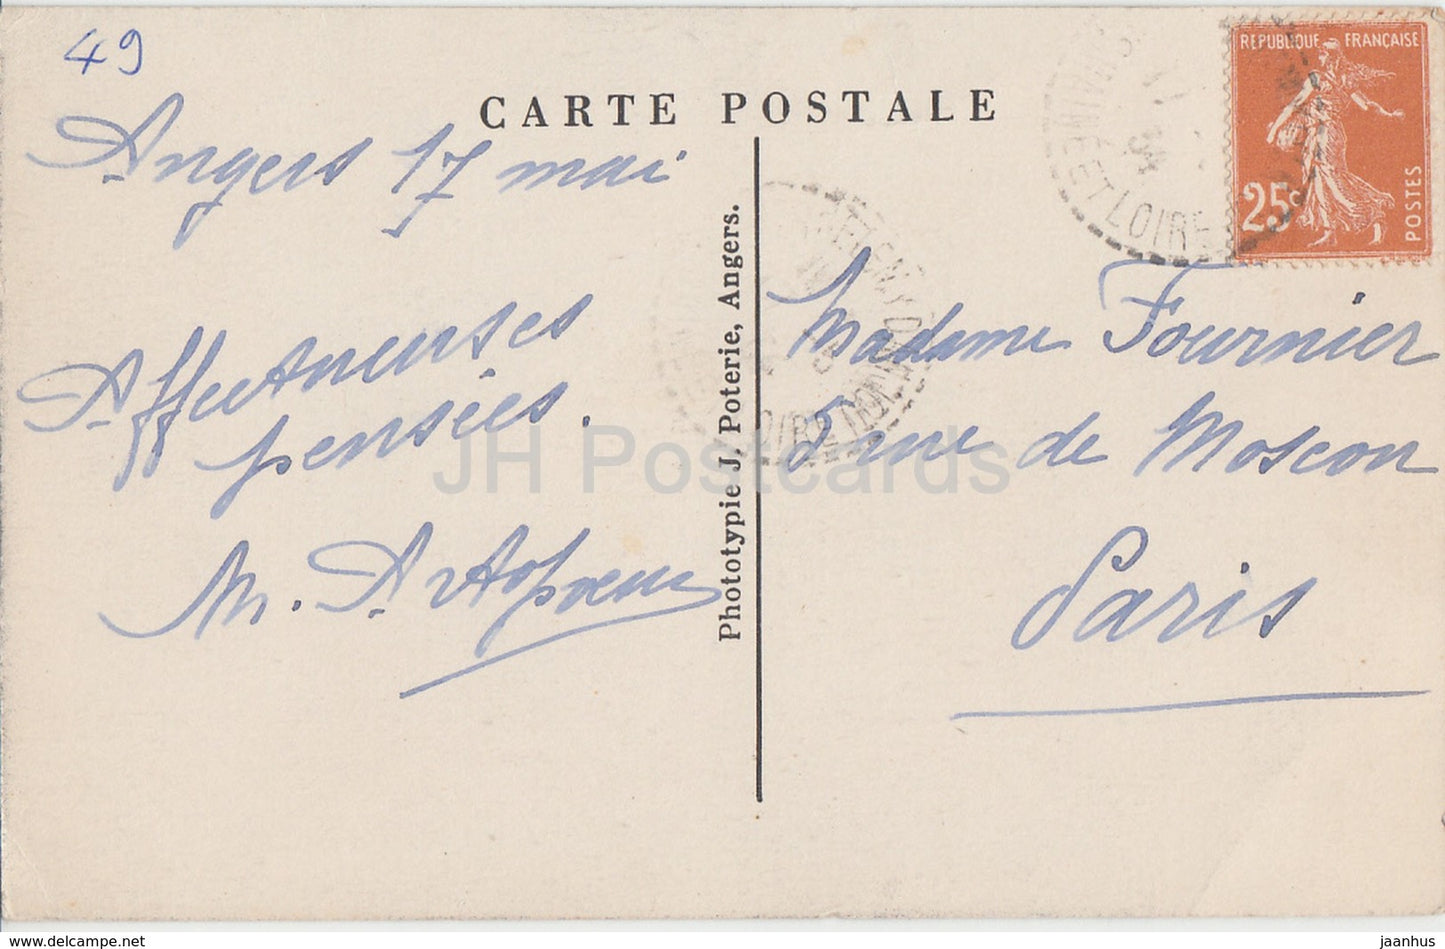 Angers - Le Chateau - Les Tours principales - castle - 3 - 1934 - old postcard - France - used